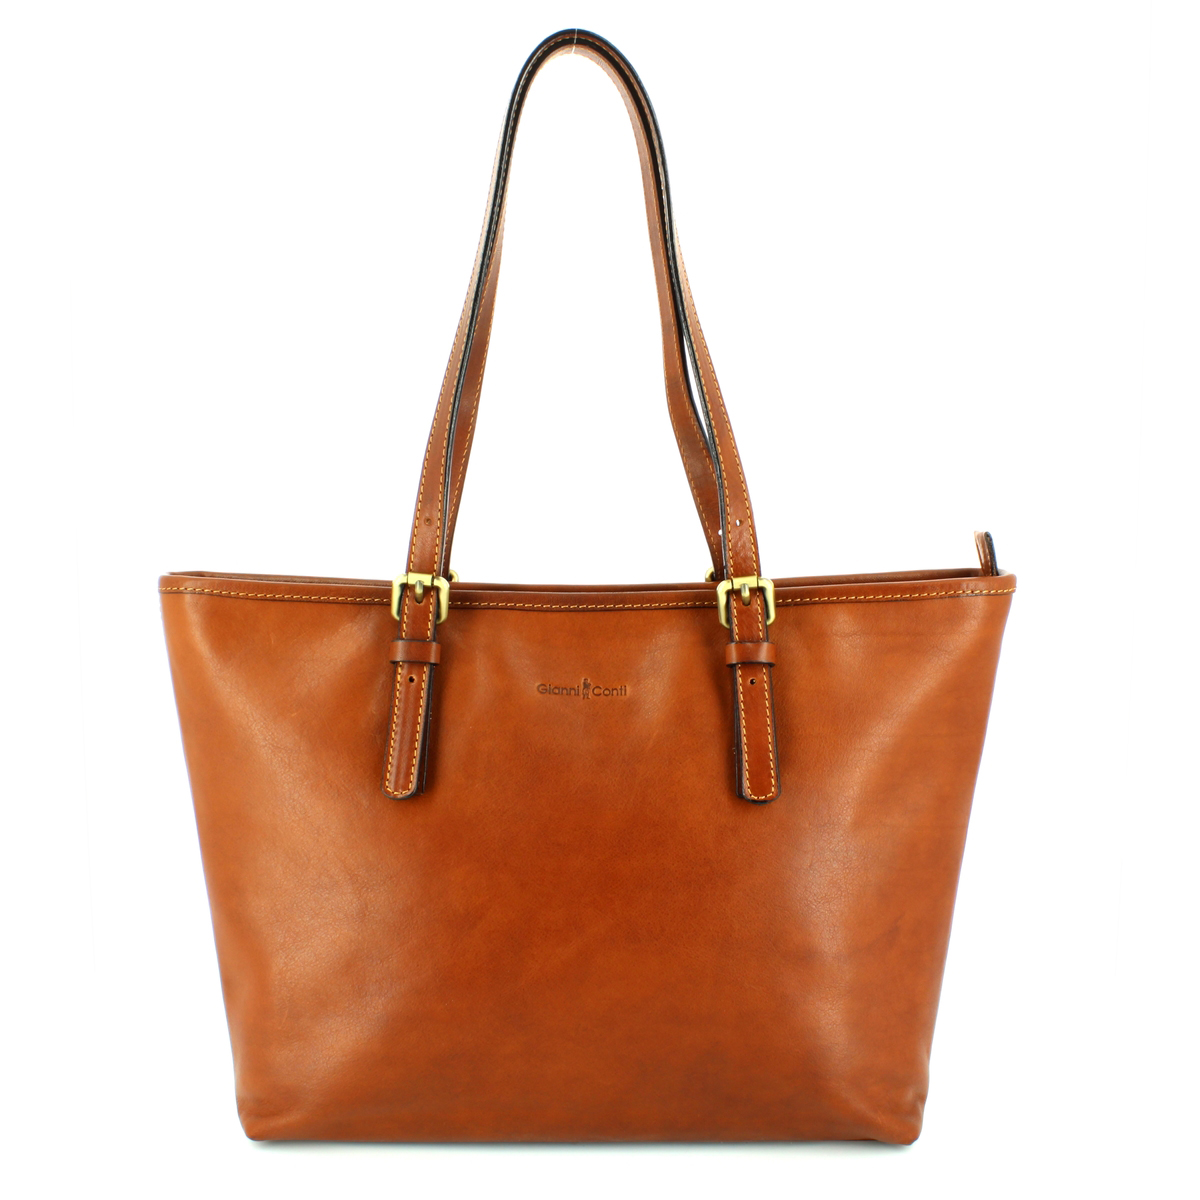 Gianni Conti Shoulder Back 913180-25 Tan handbag